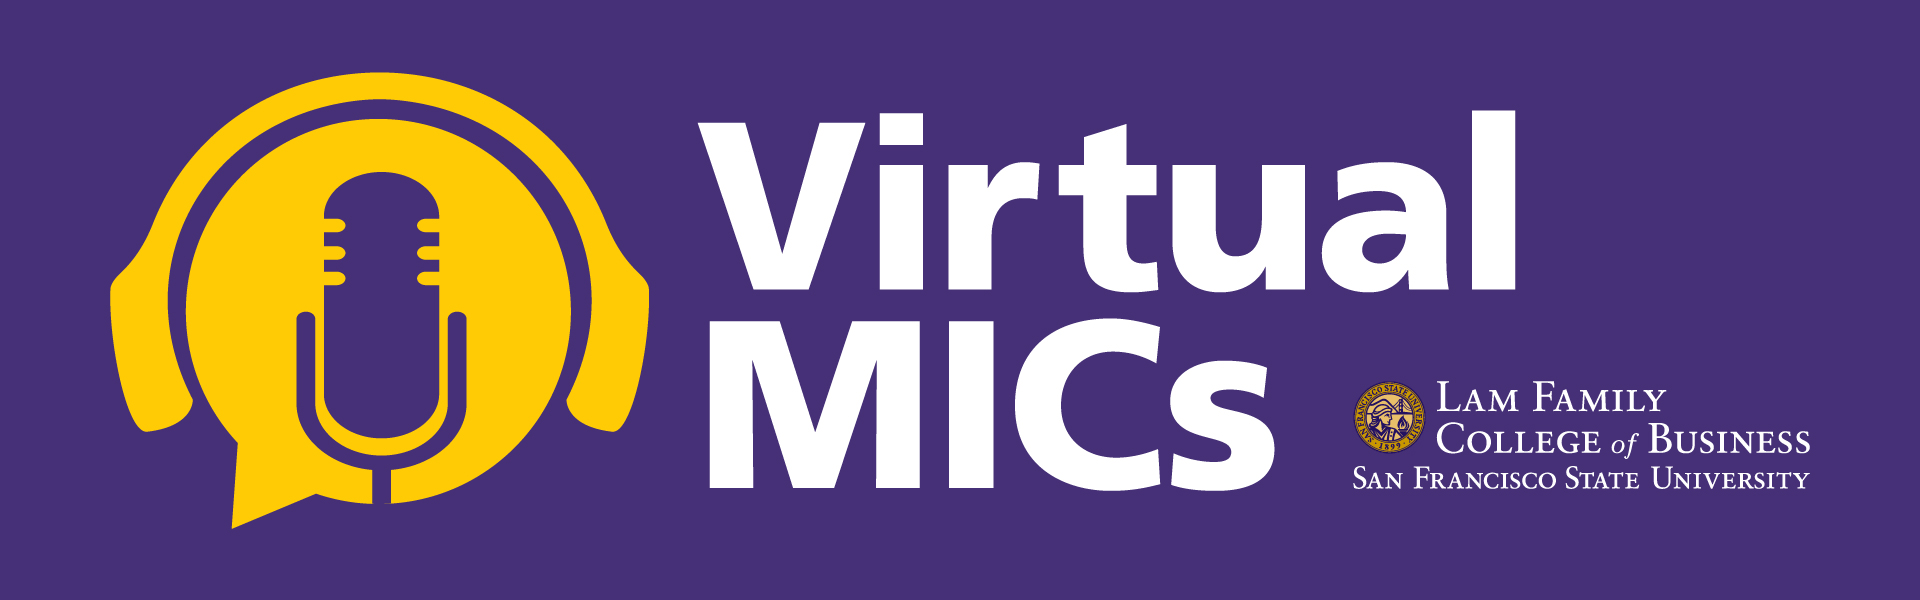 Virtual Mics